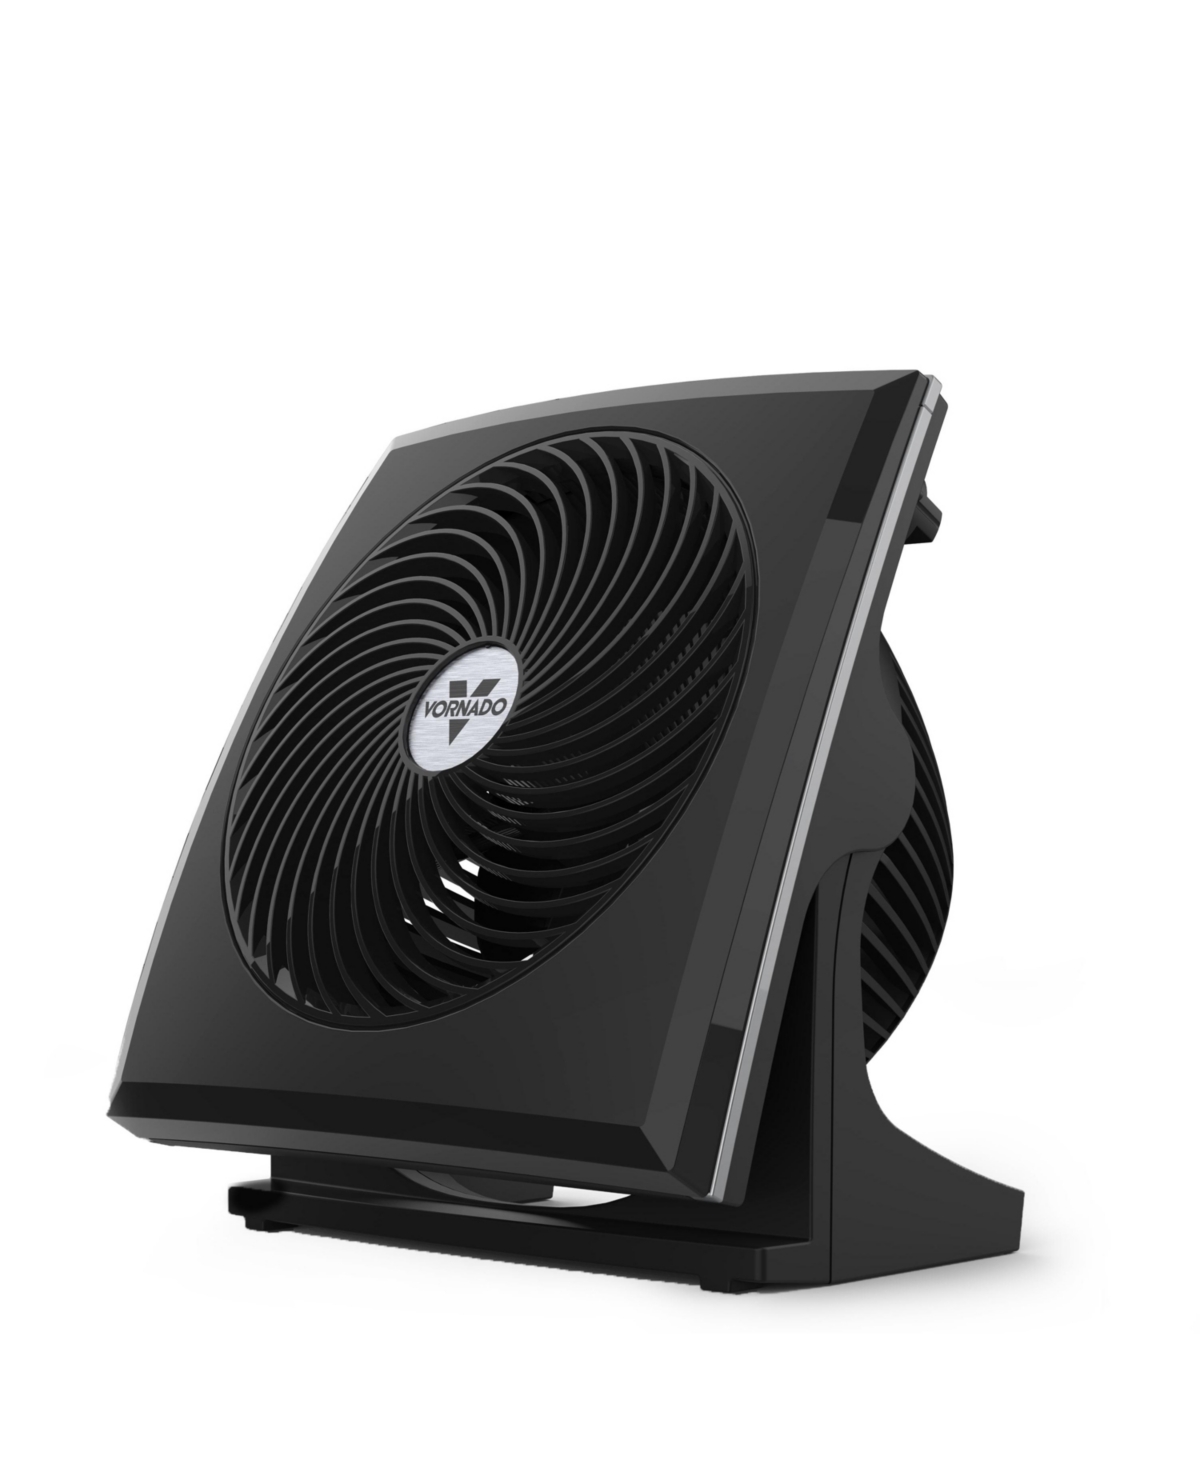 Vornado 573t Whole Room Air Circulator Fan With Pivoting Head, Black